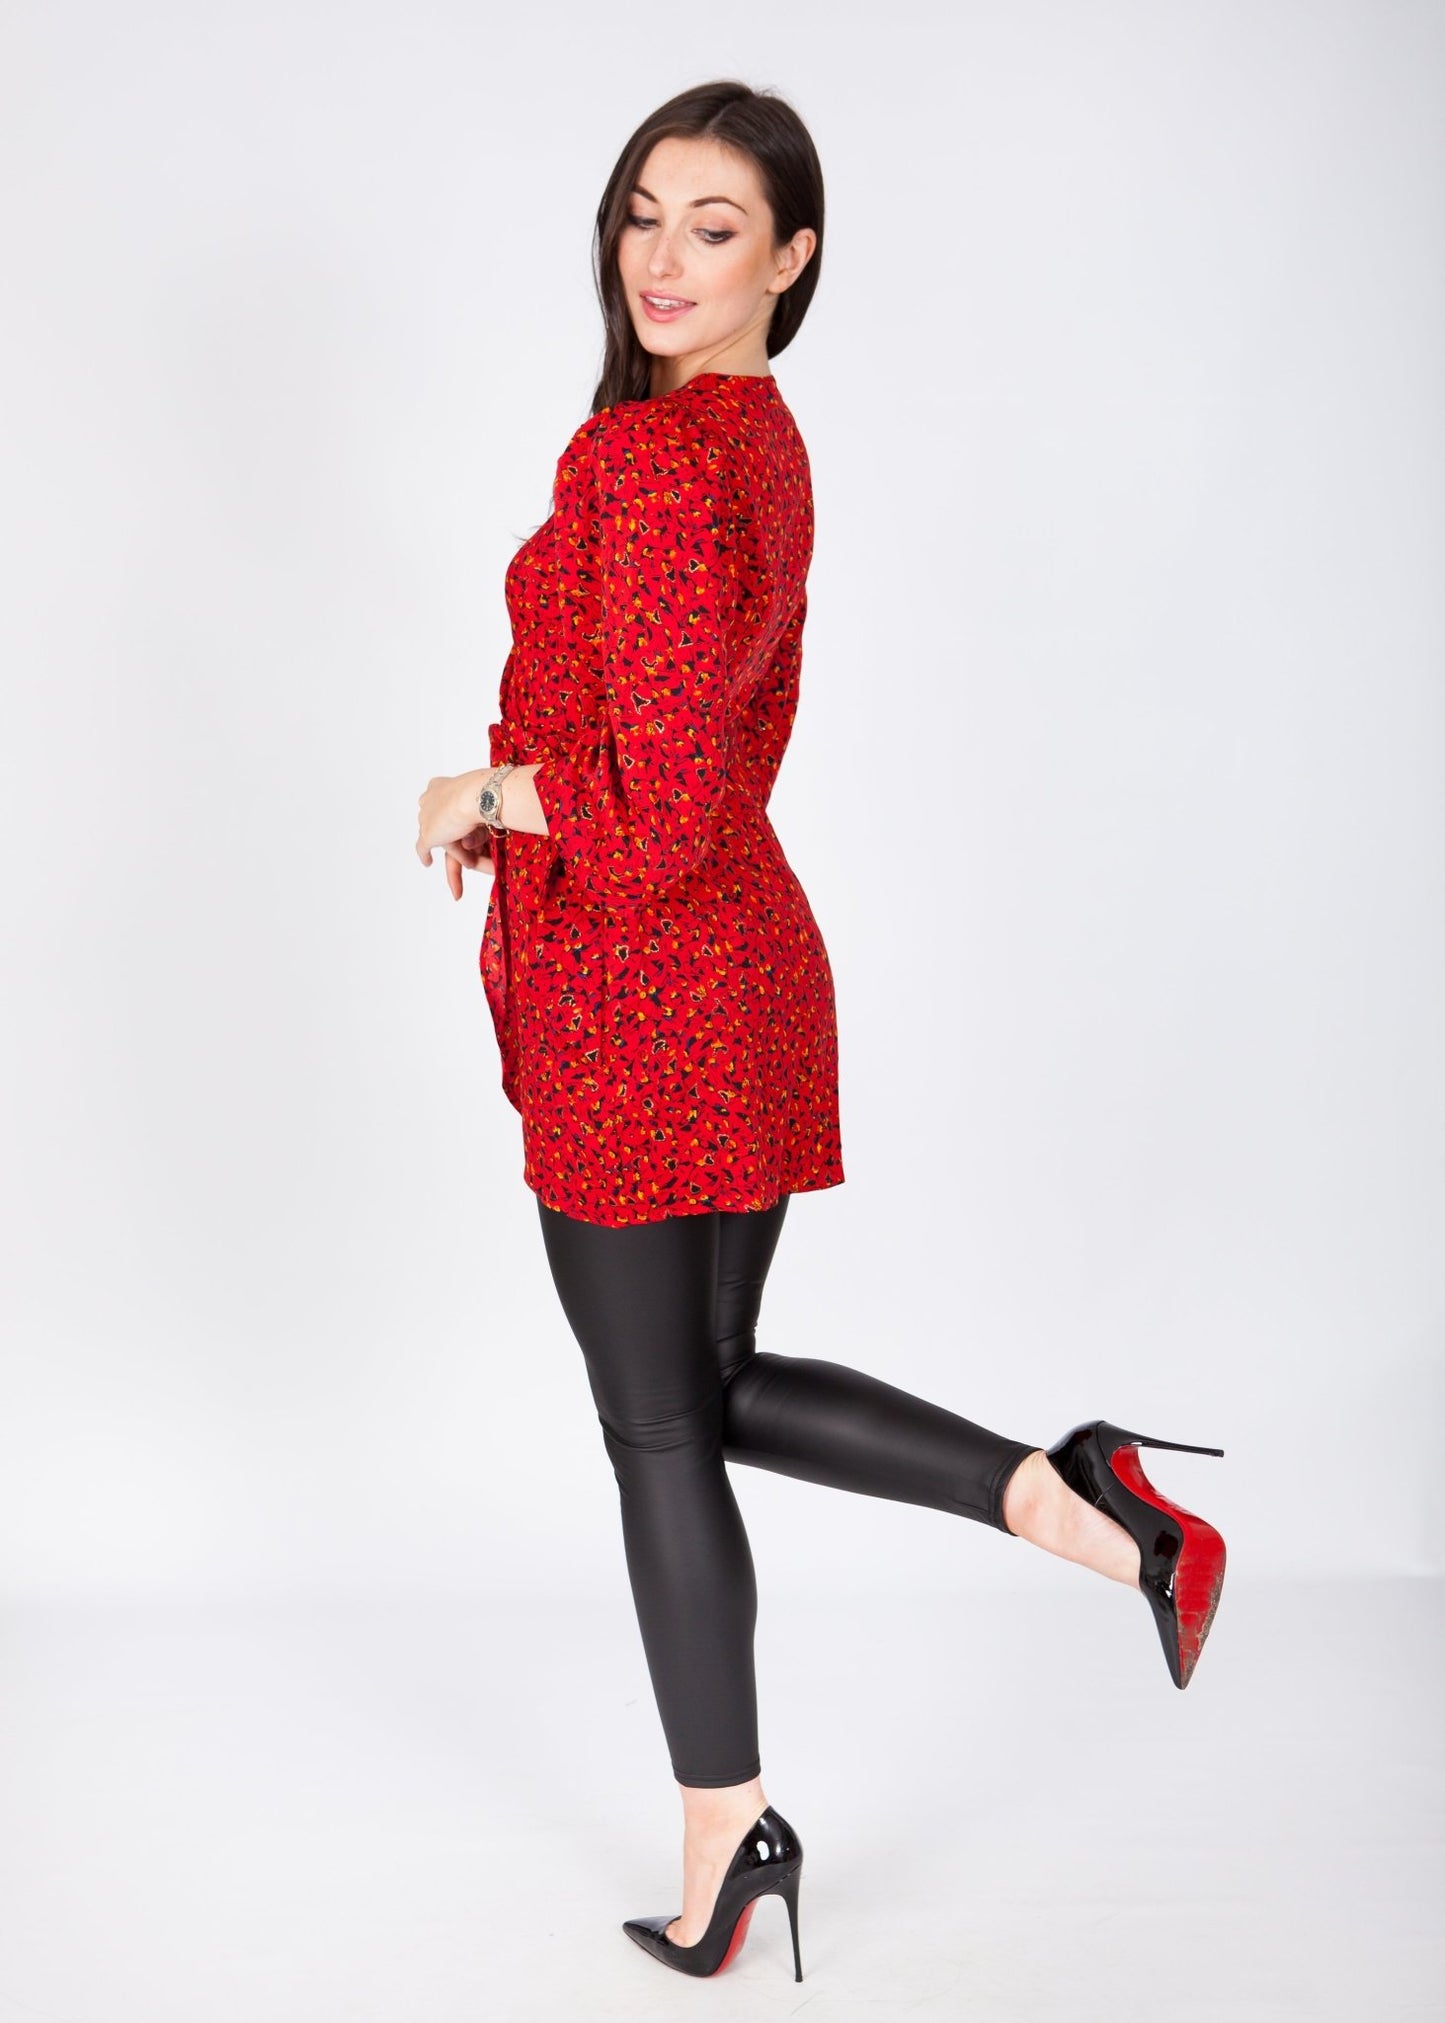 Kate Wrap Top In Red Print - The Walk in Wardrobe